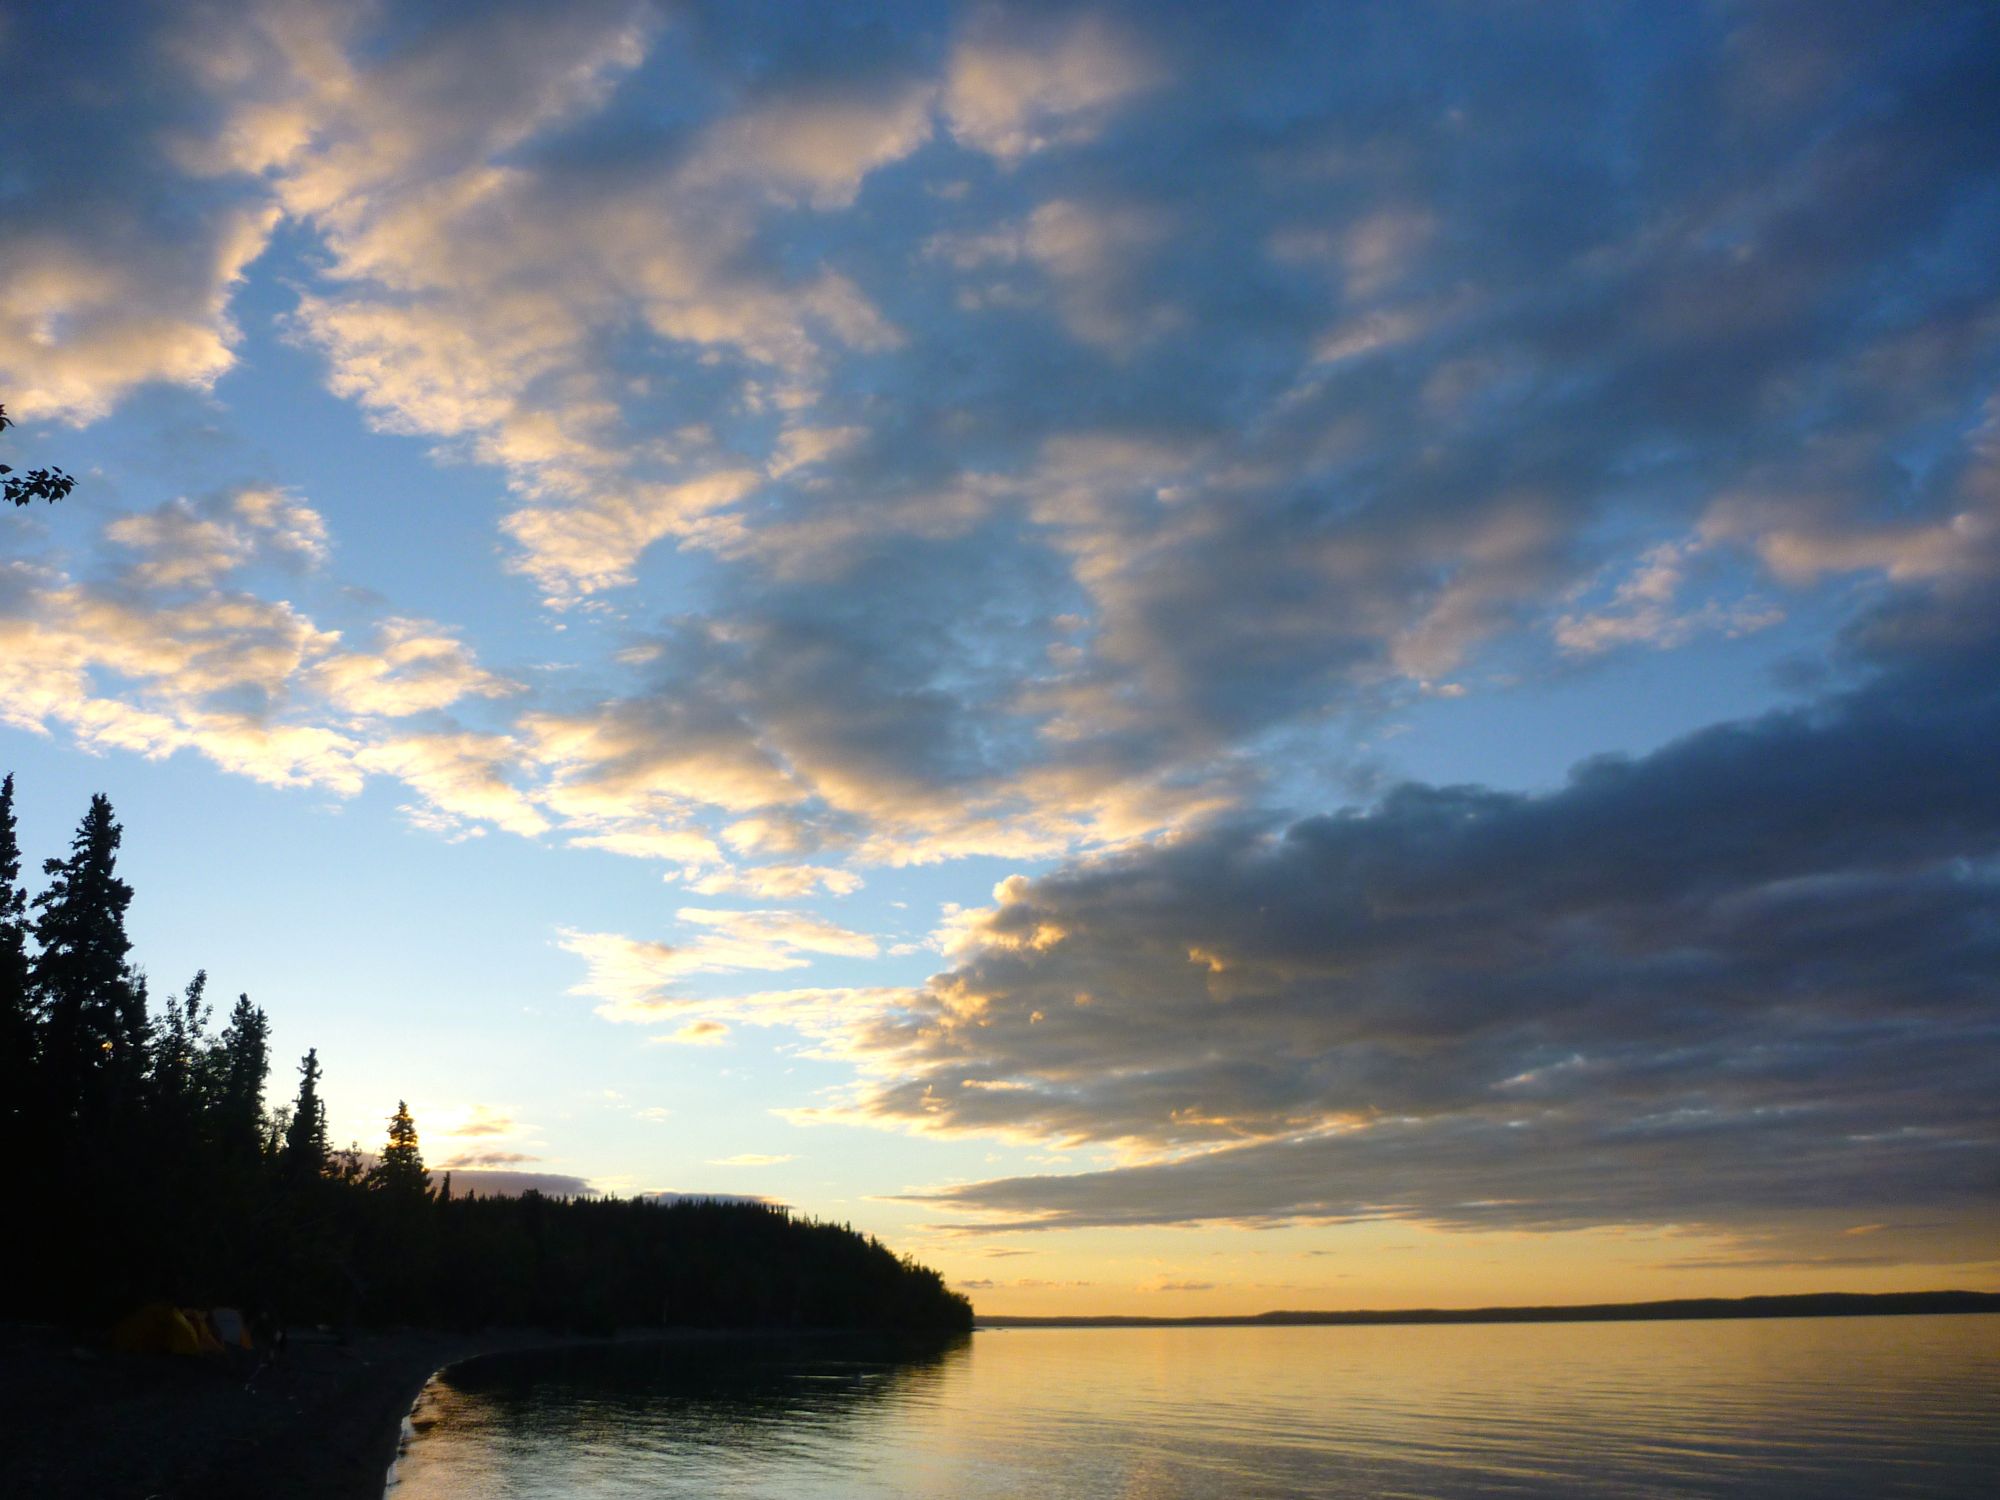 Sunset at Skilak Lake